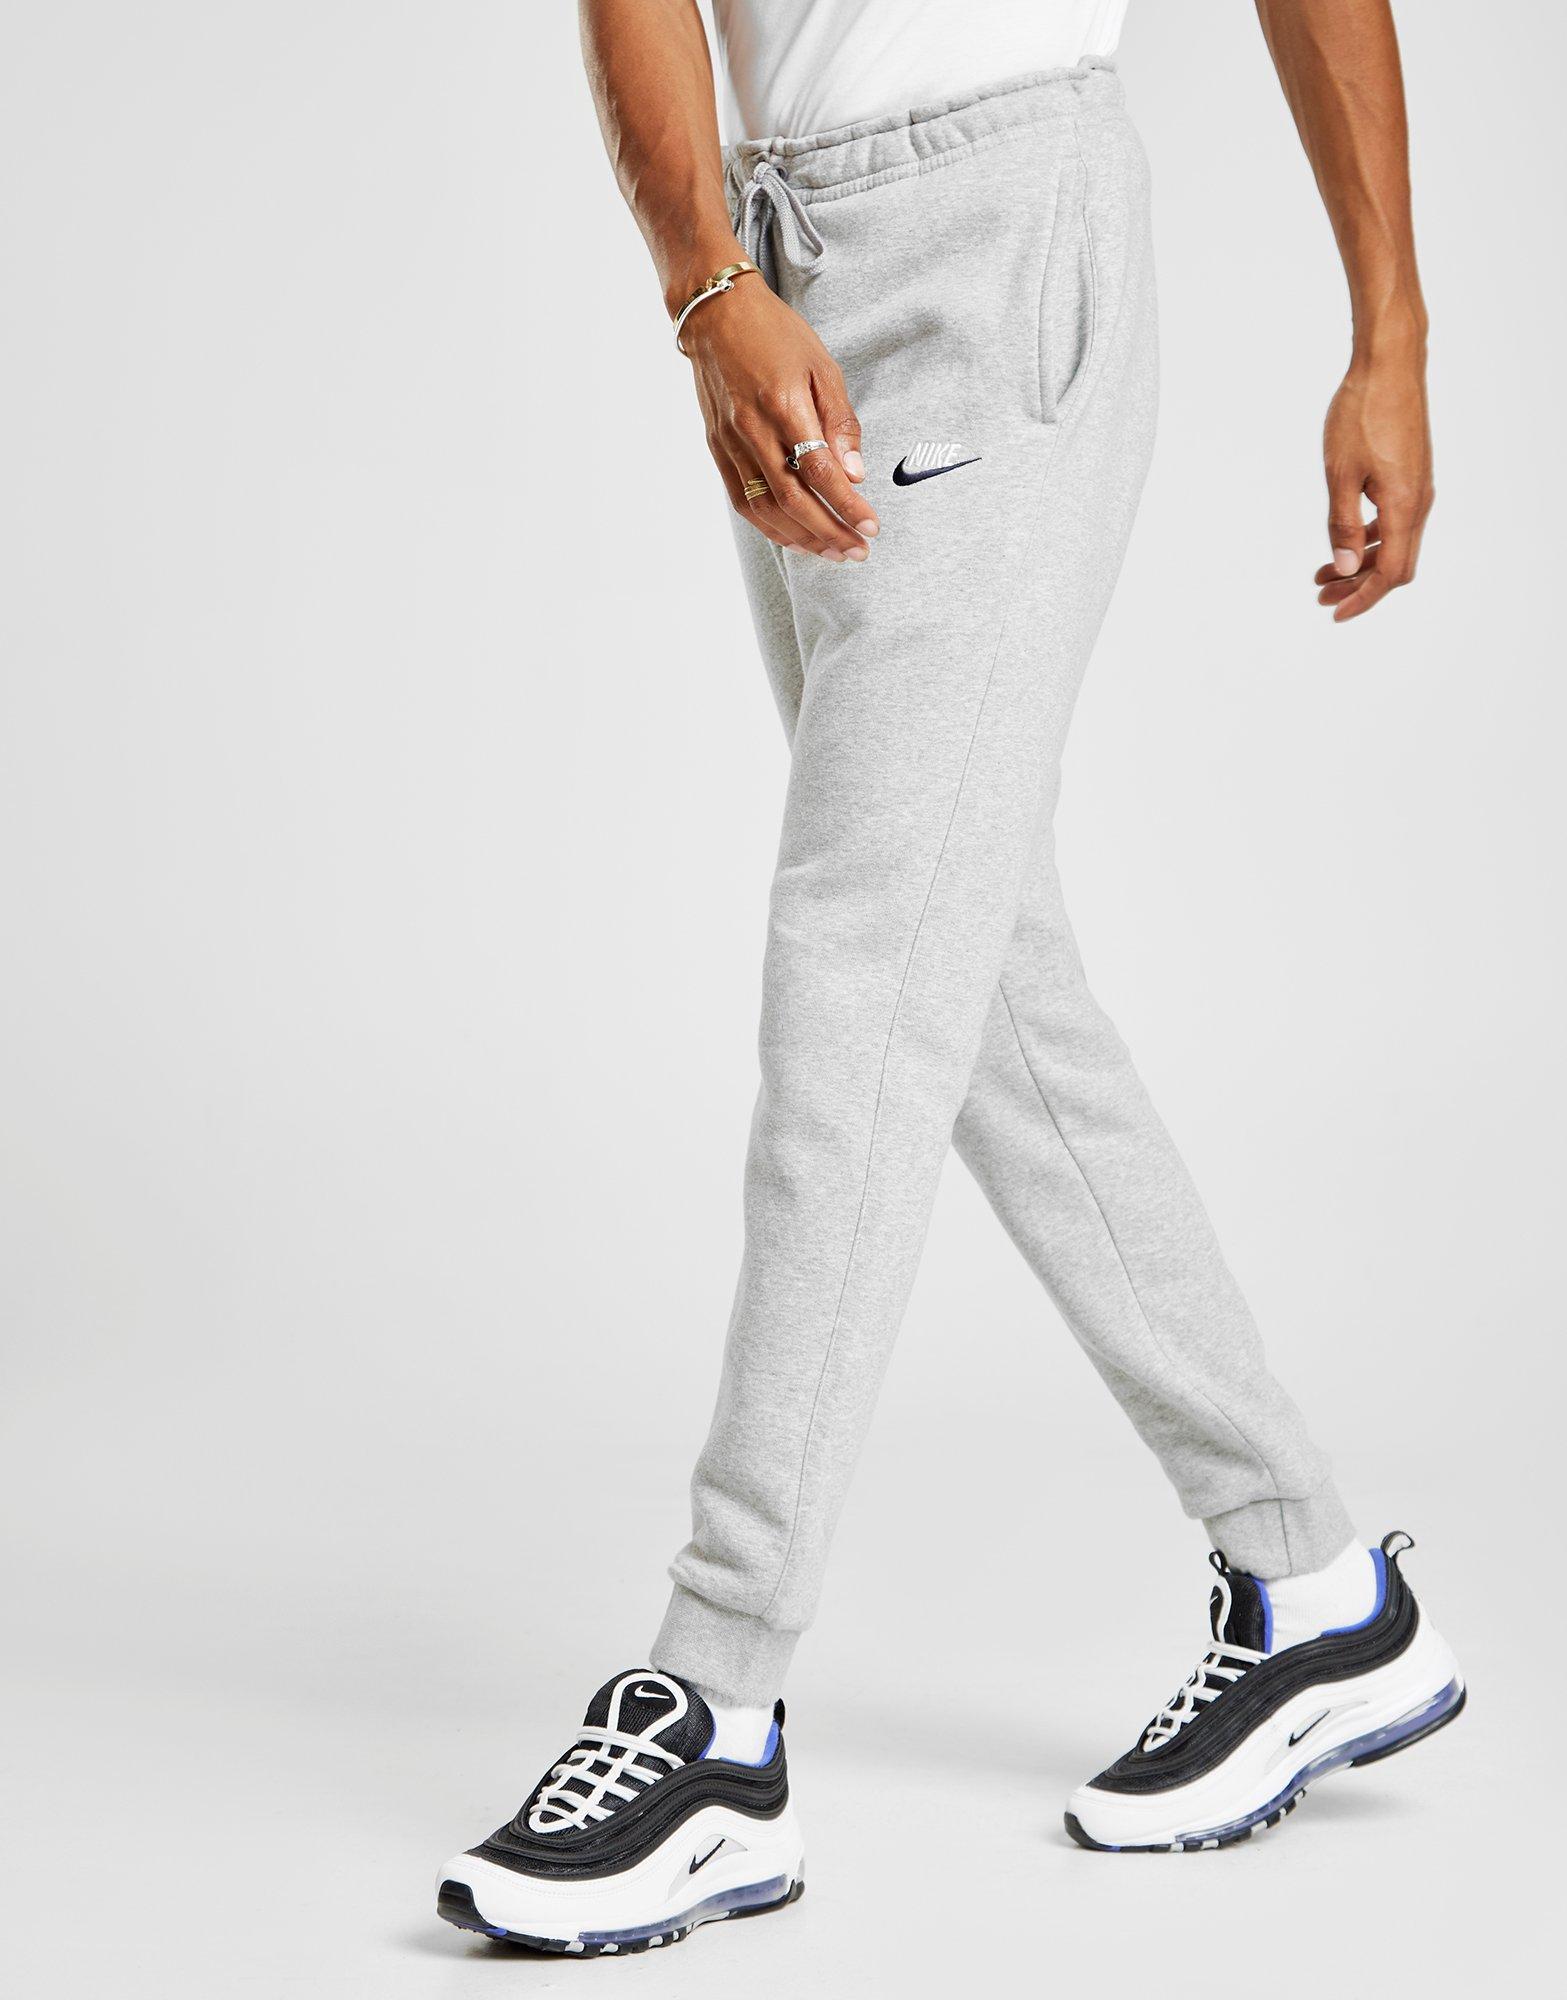 Nike Foundation Fleece Track Pants in Gray for Men - Lyst